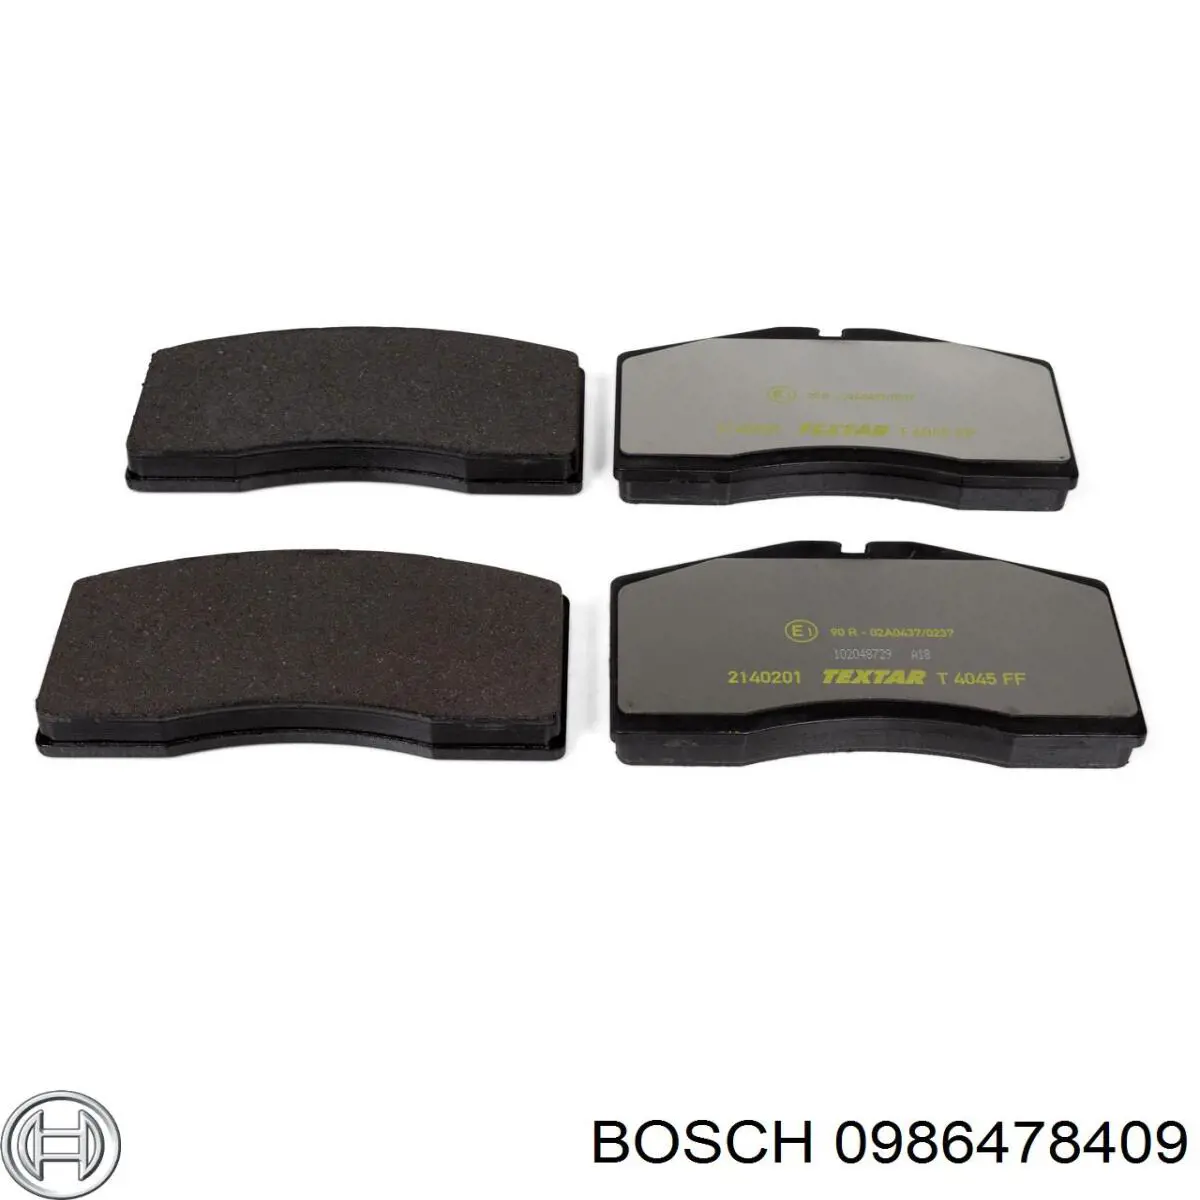 986478409 Bosch disco de freno delantero